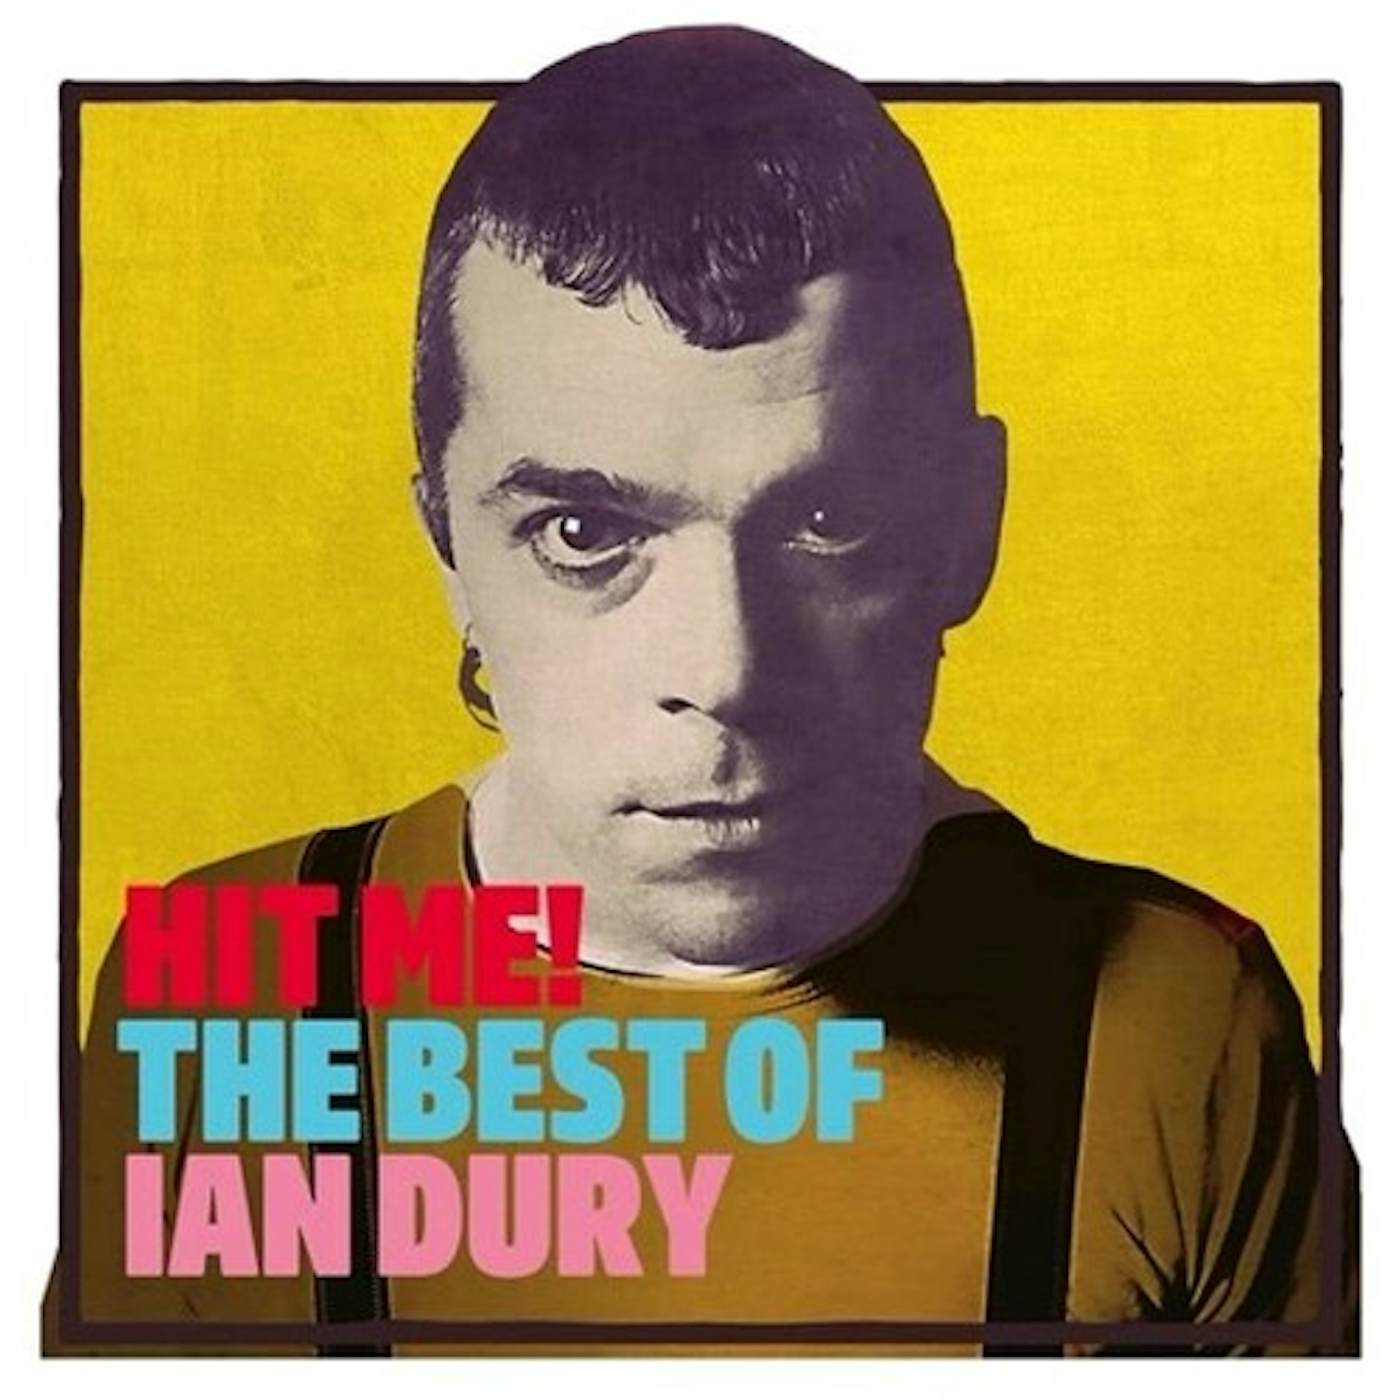 Ian Dury HIT ME! THE BEST OF (X) CD